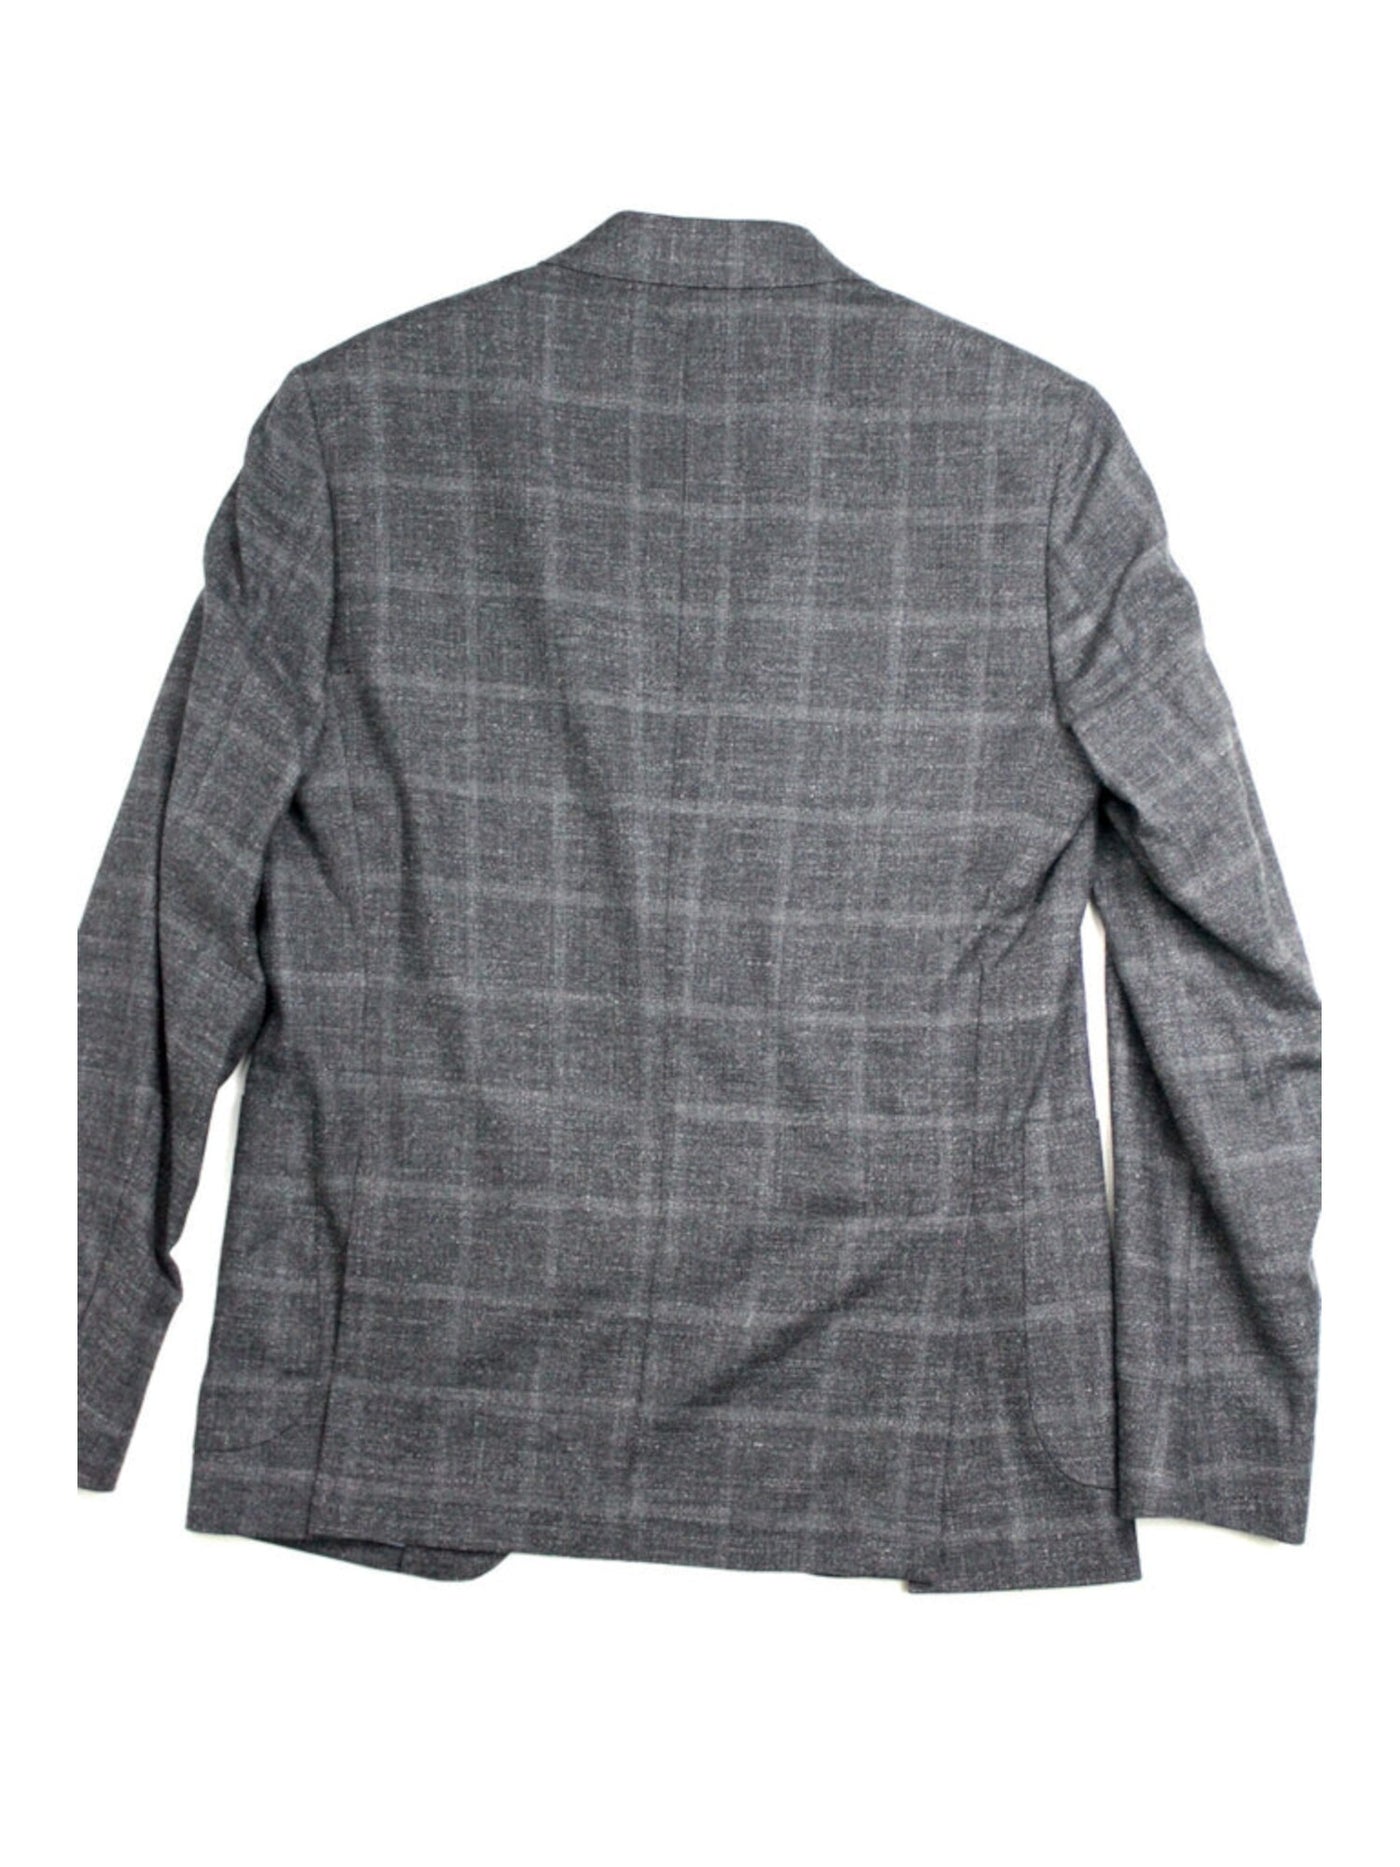 ZANELLA Mens Gray Single Breasted, Plaid Regular Fit Wool Blend Sport Coat 42R